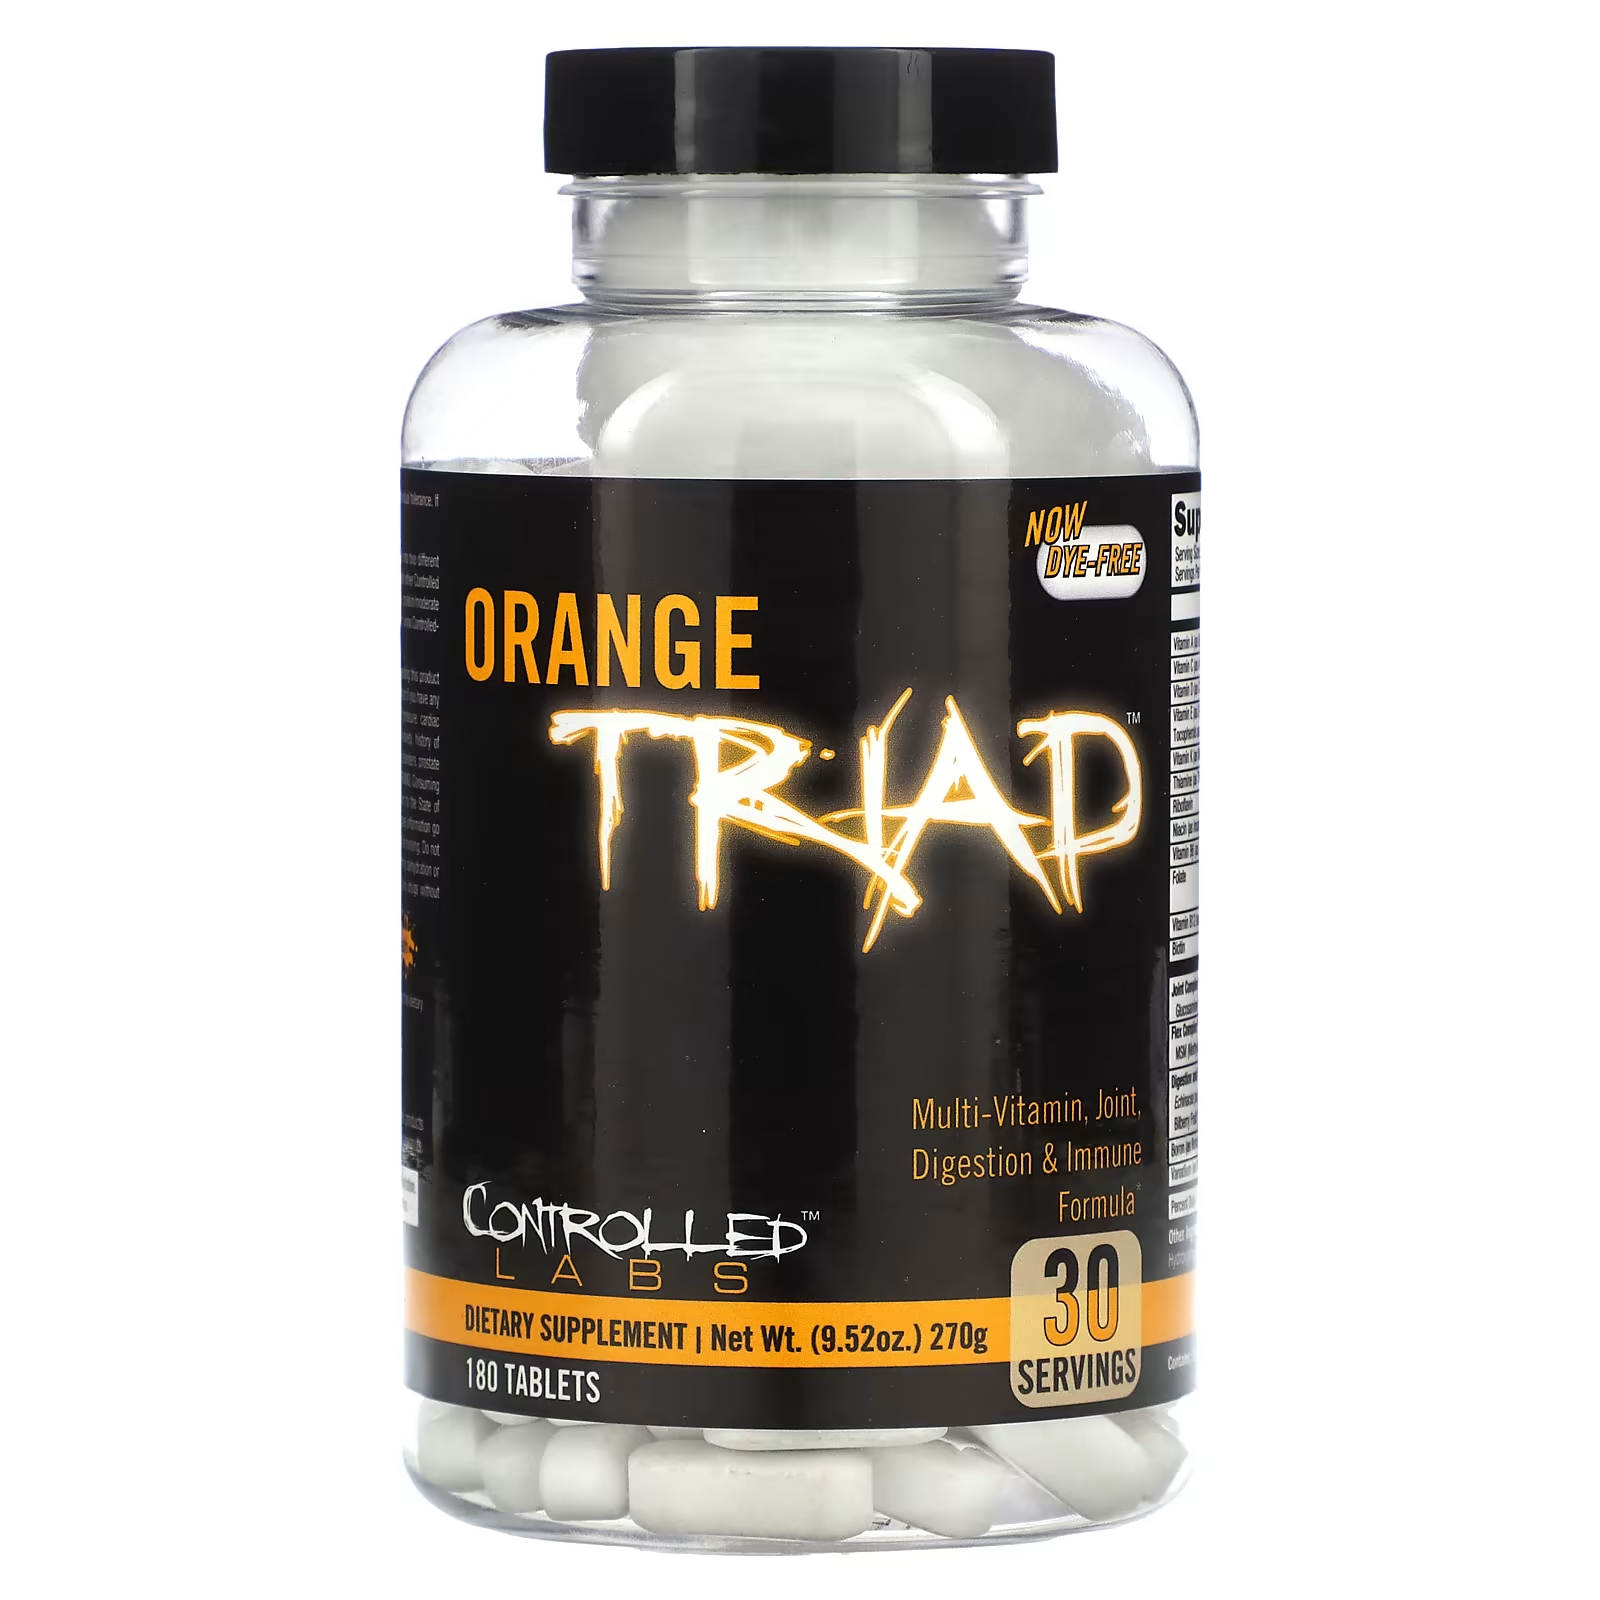 Мультивитаминная формула для пищеварения и иммунитета для суставов Controlled Labs Orange Triad, 180 таблеток